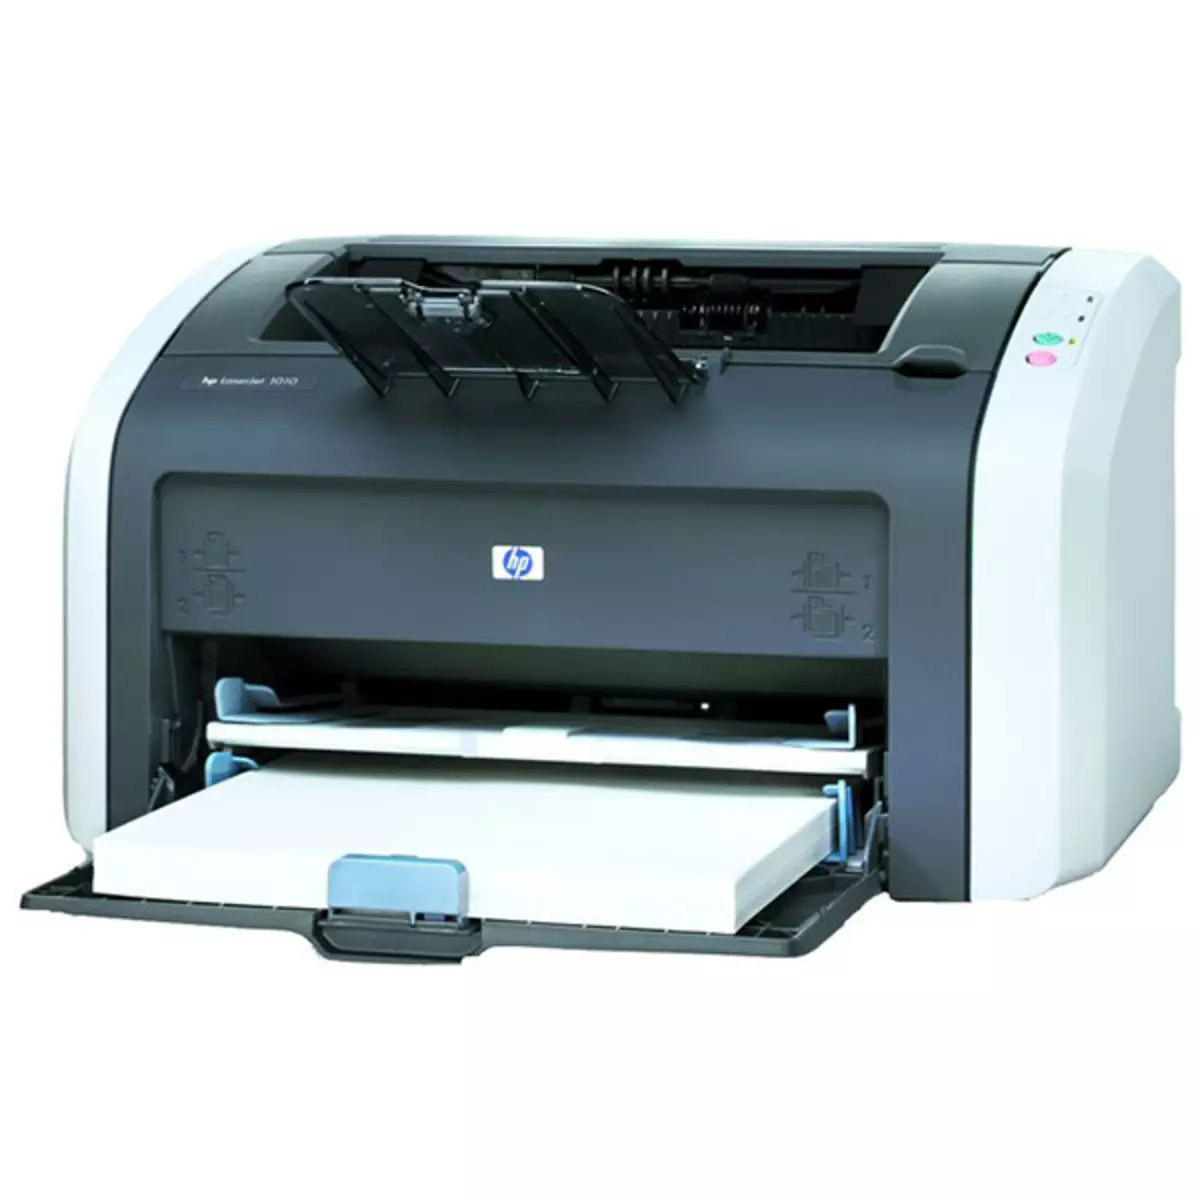 Aflaai HP LaserJet 1010 Printerdriver